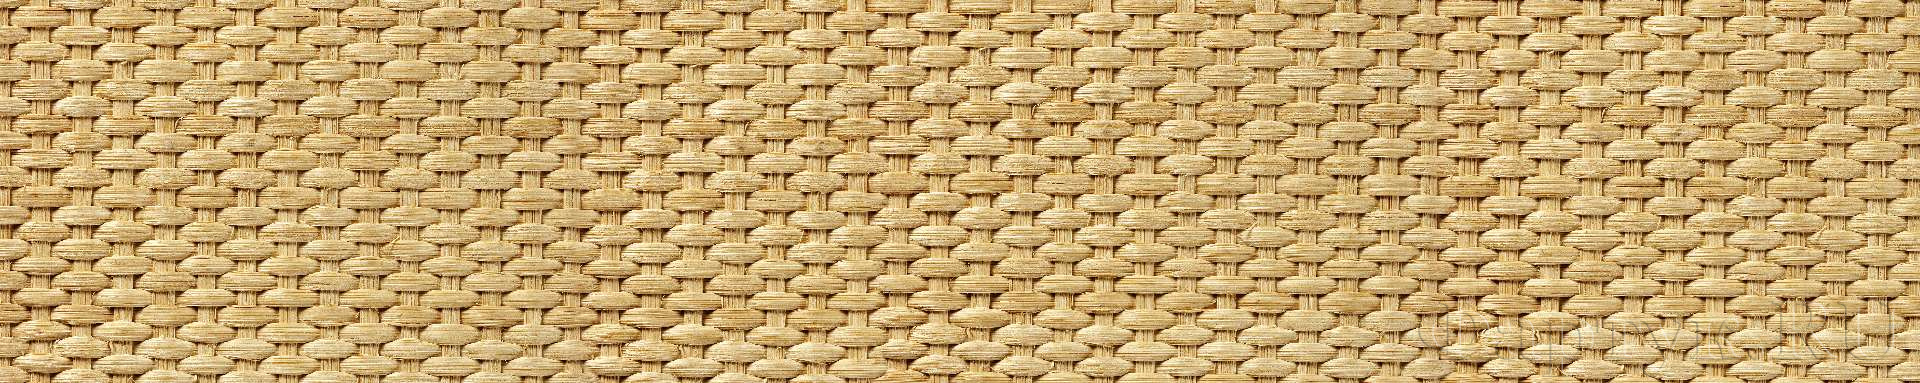 Текстура плетение мешковины